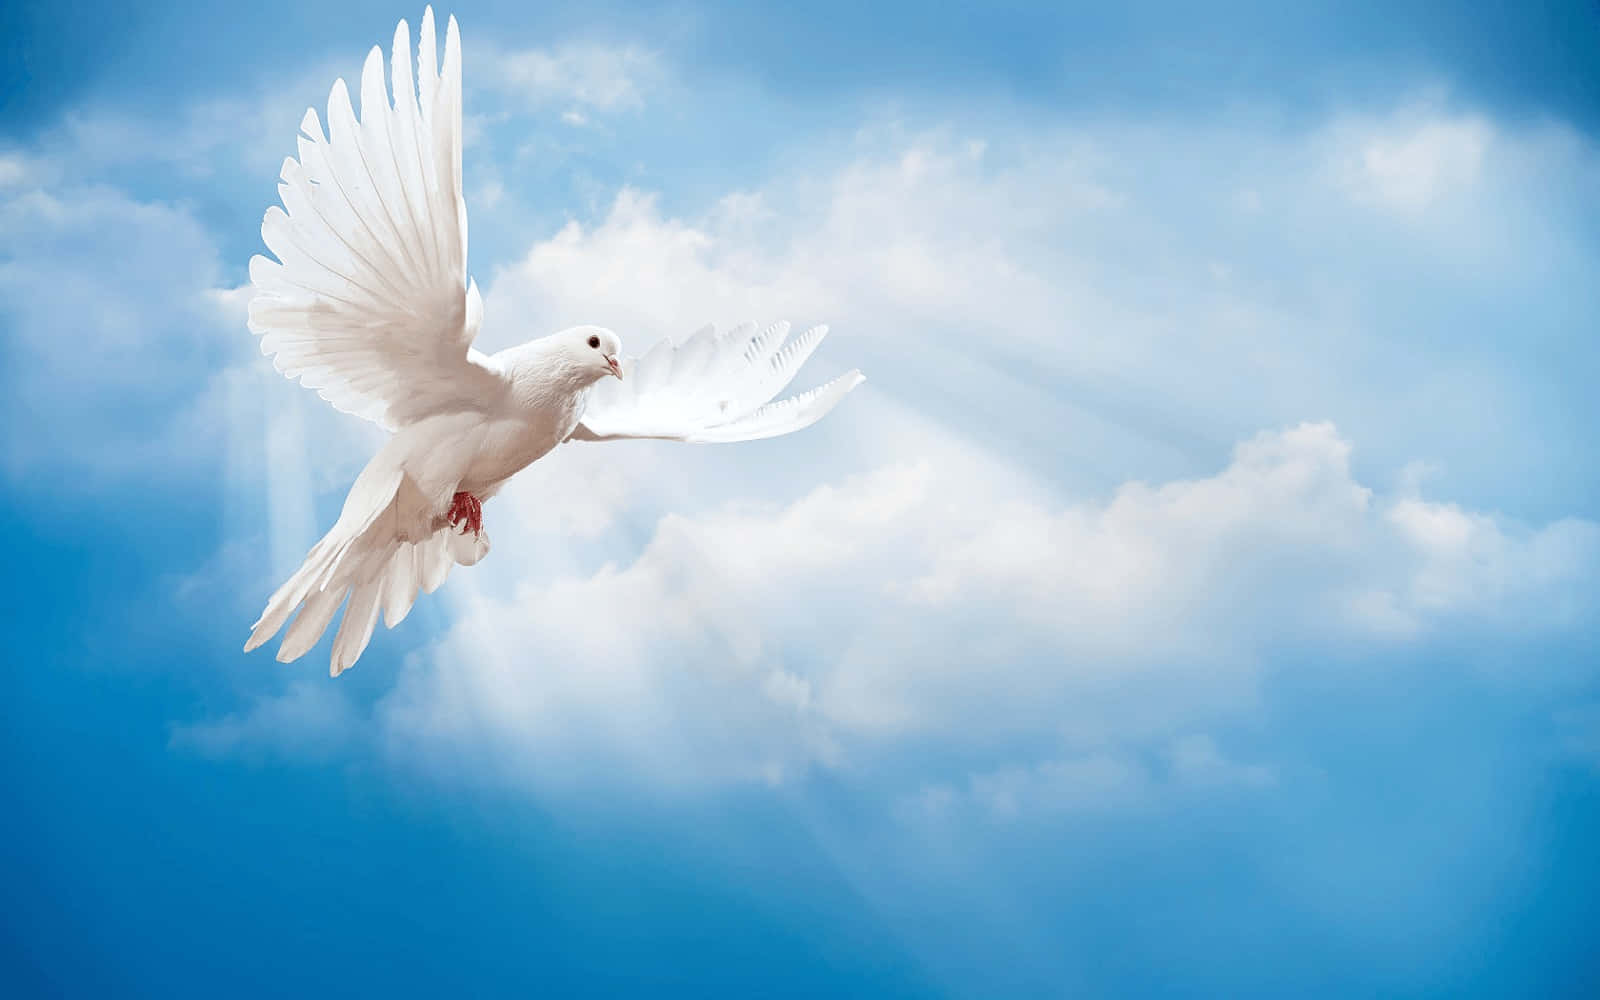 Graceful white dove soaring in a blue sky